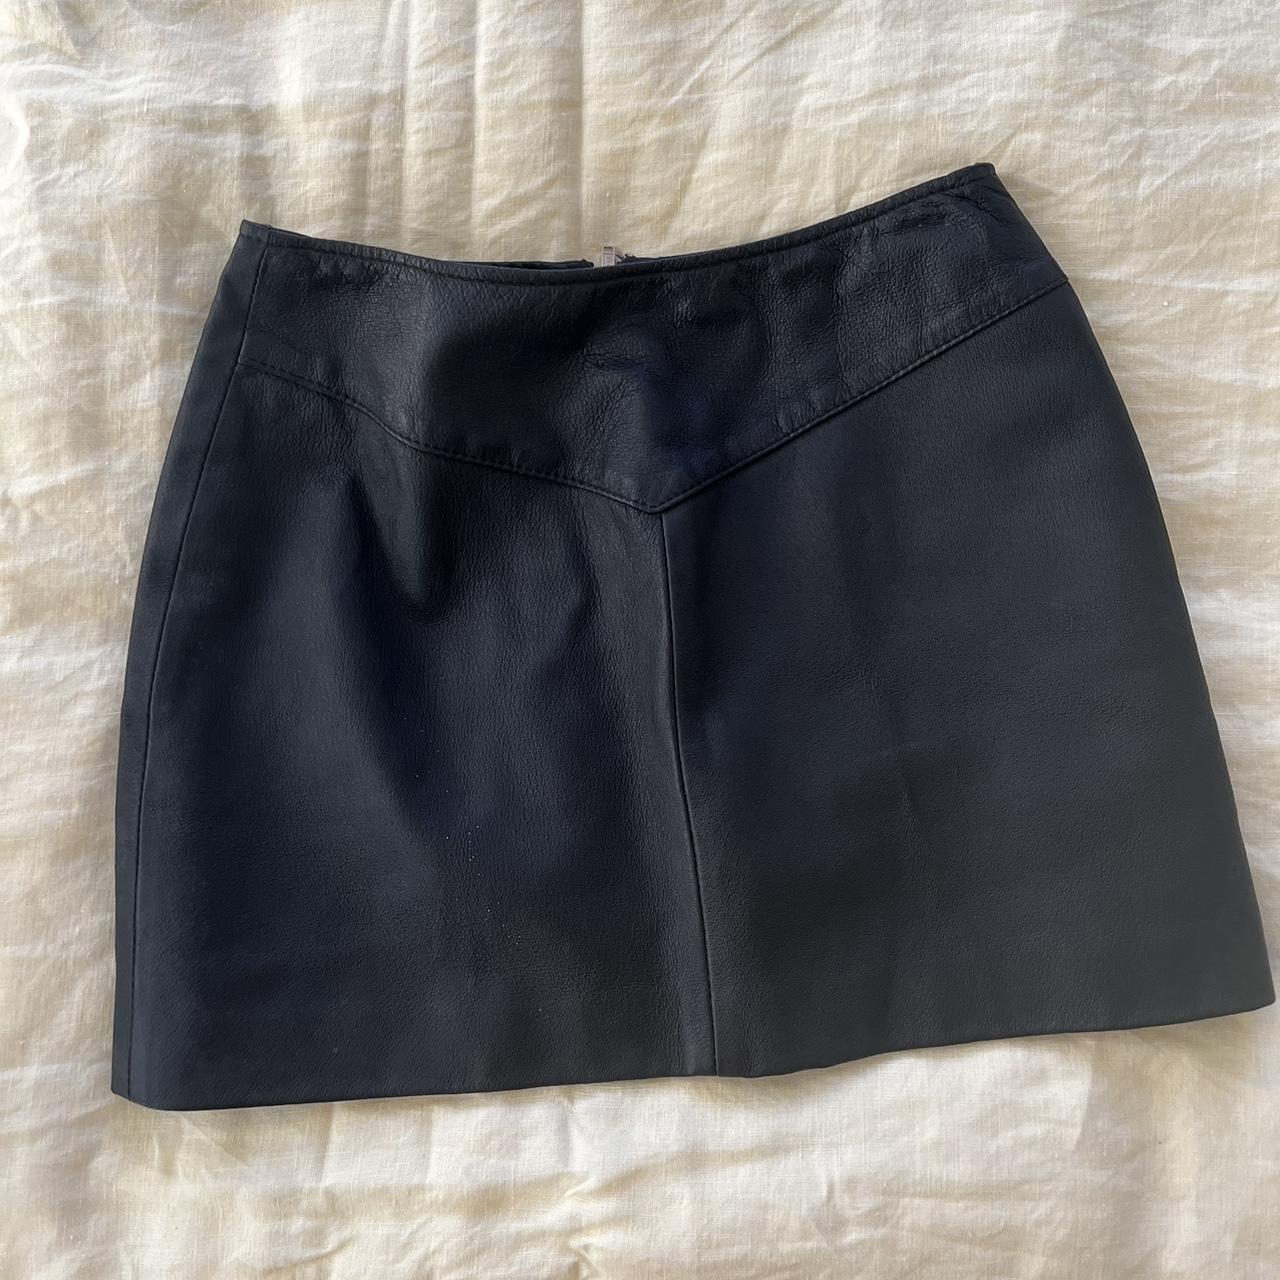 Hottest little vintage black leather mini skirt.... - Depop